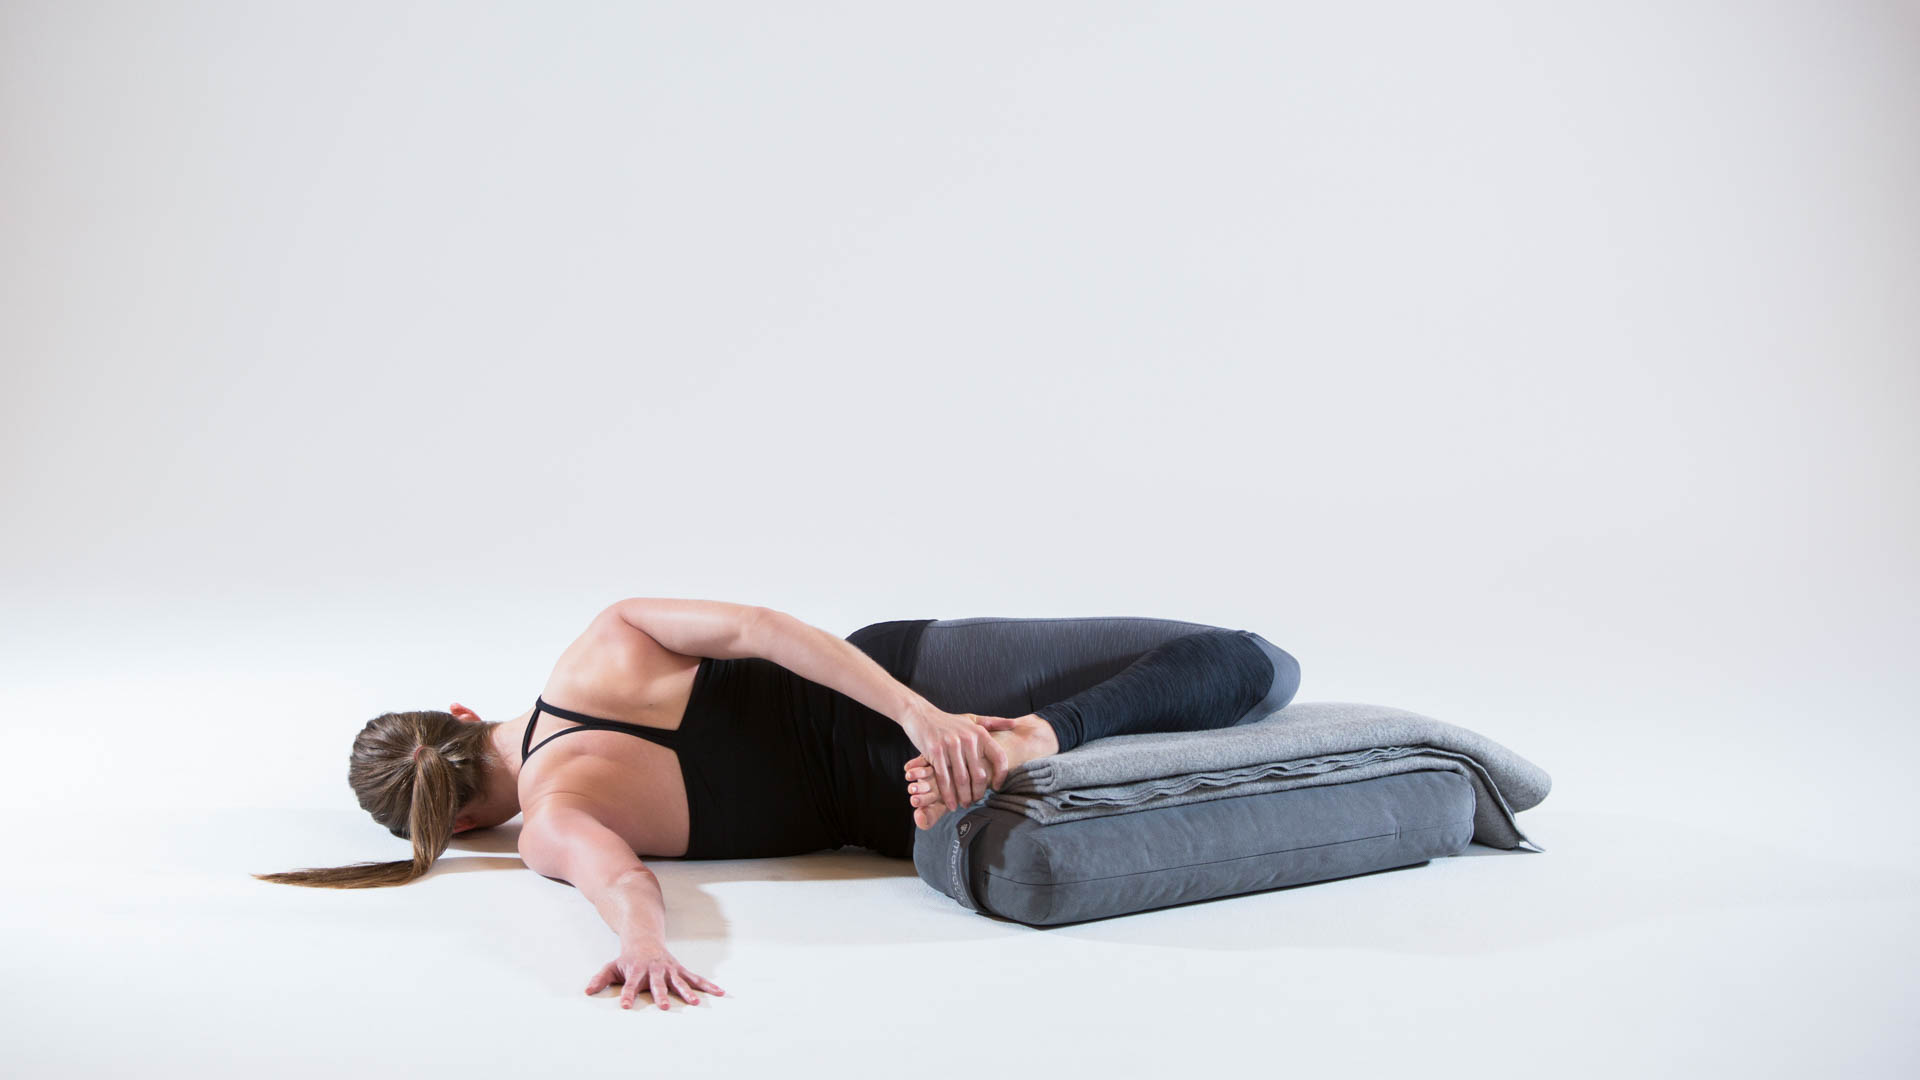 Yin Yoga for Frozen Shoulder Syndrome